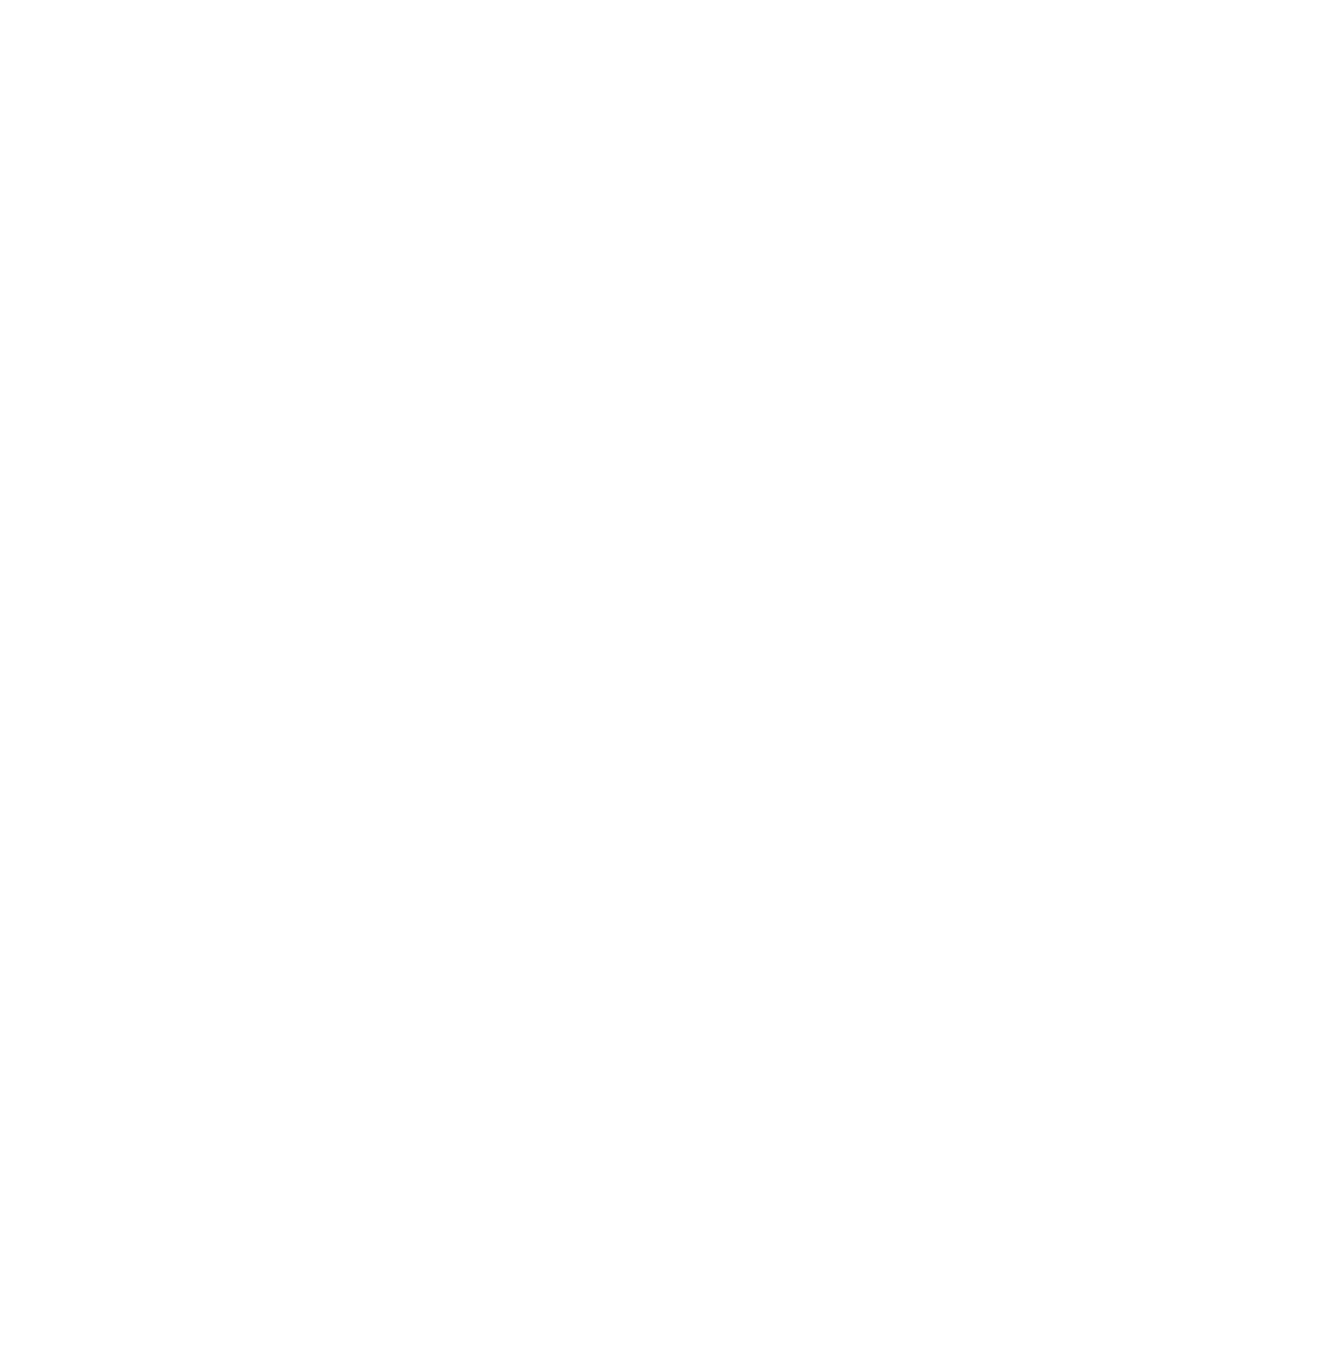 Kirkkopuisto logo white